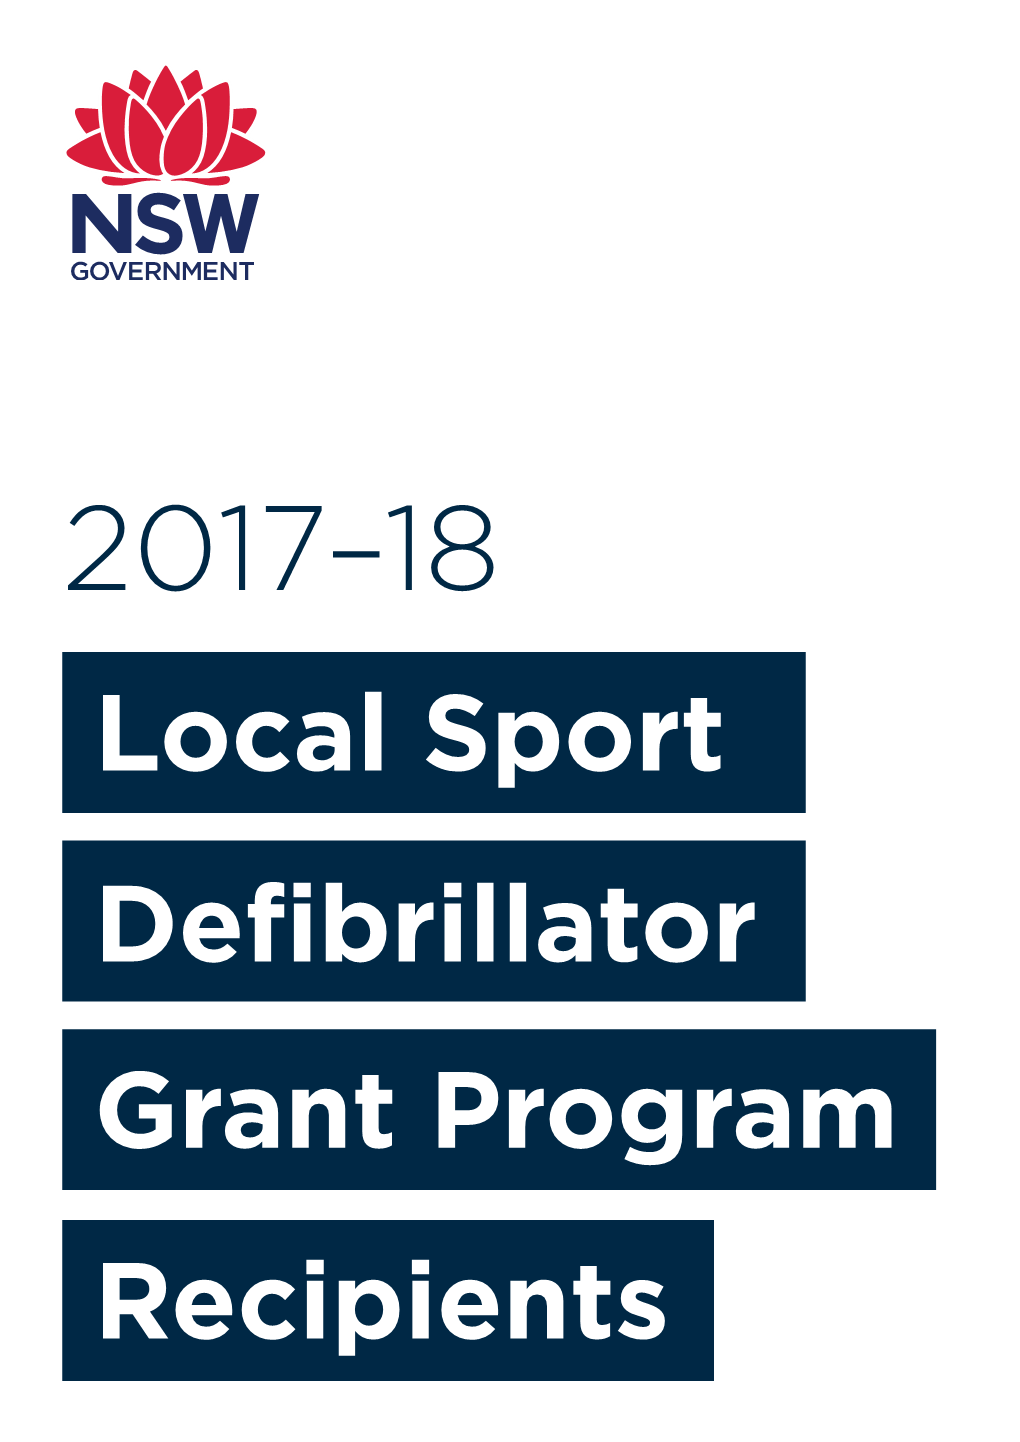 2017/18 Local Sport Defibrillator Grant Program Recipients